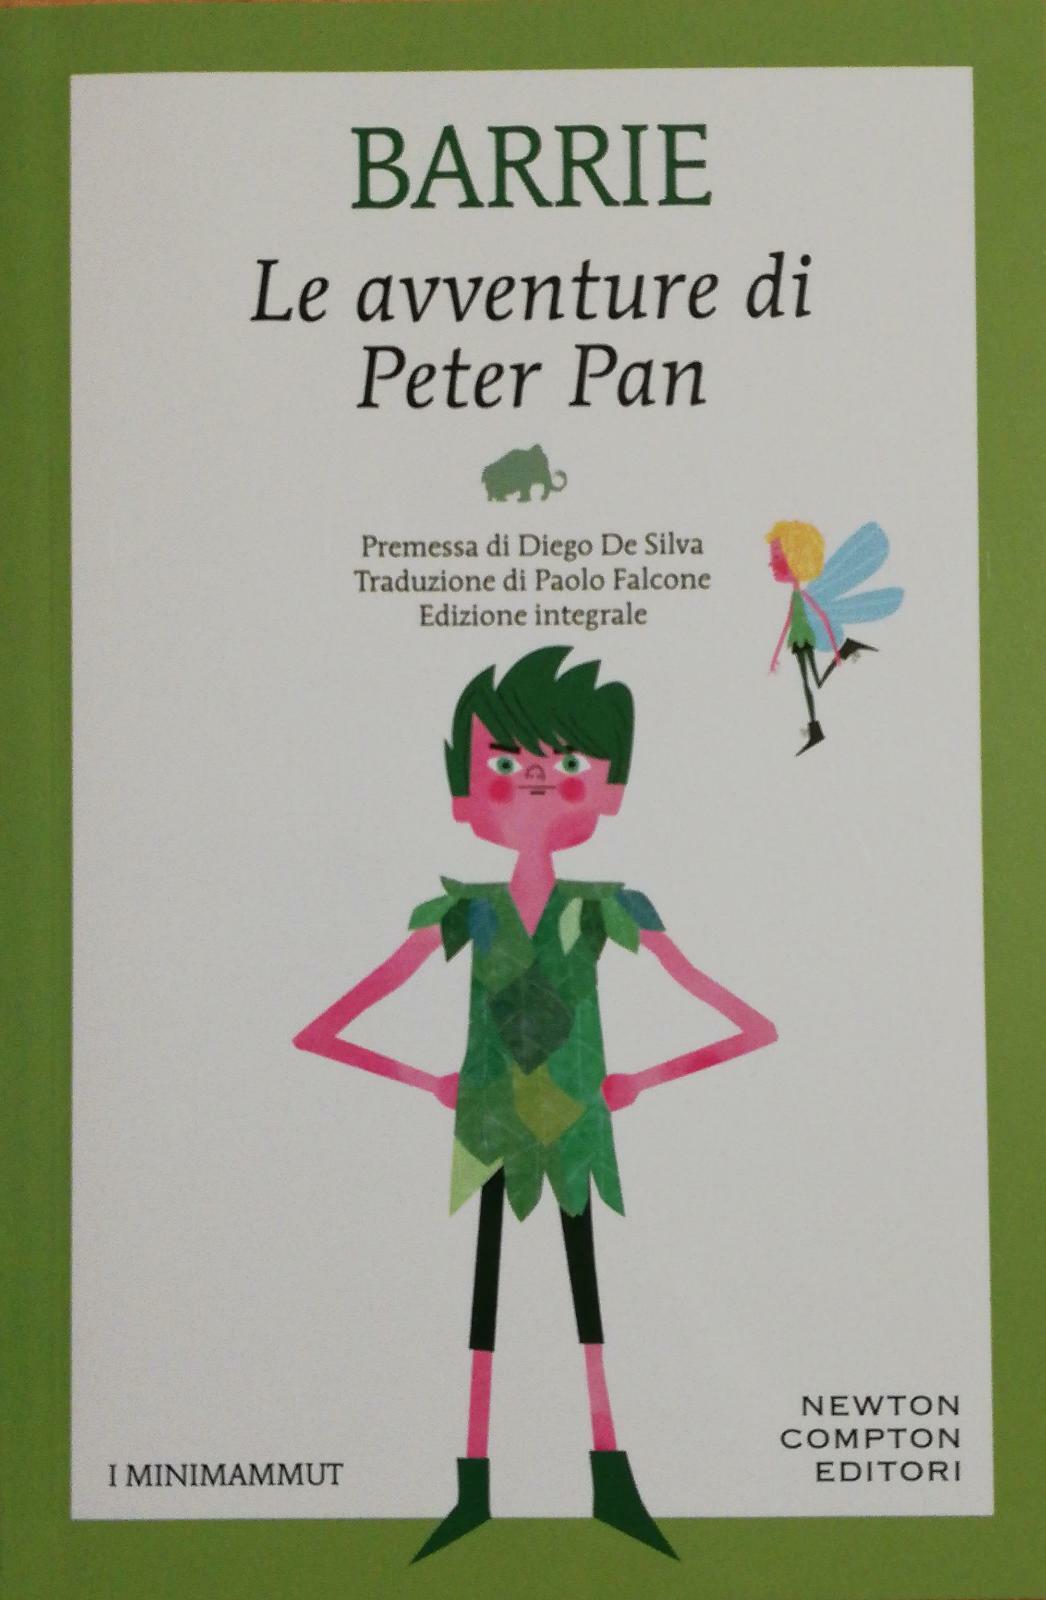 Le avventure di Peter Pan di James Matthew Barrie,  2019, Newton Compton Editori